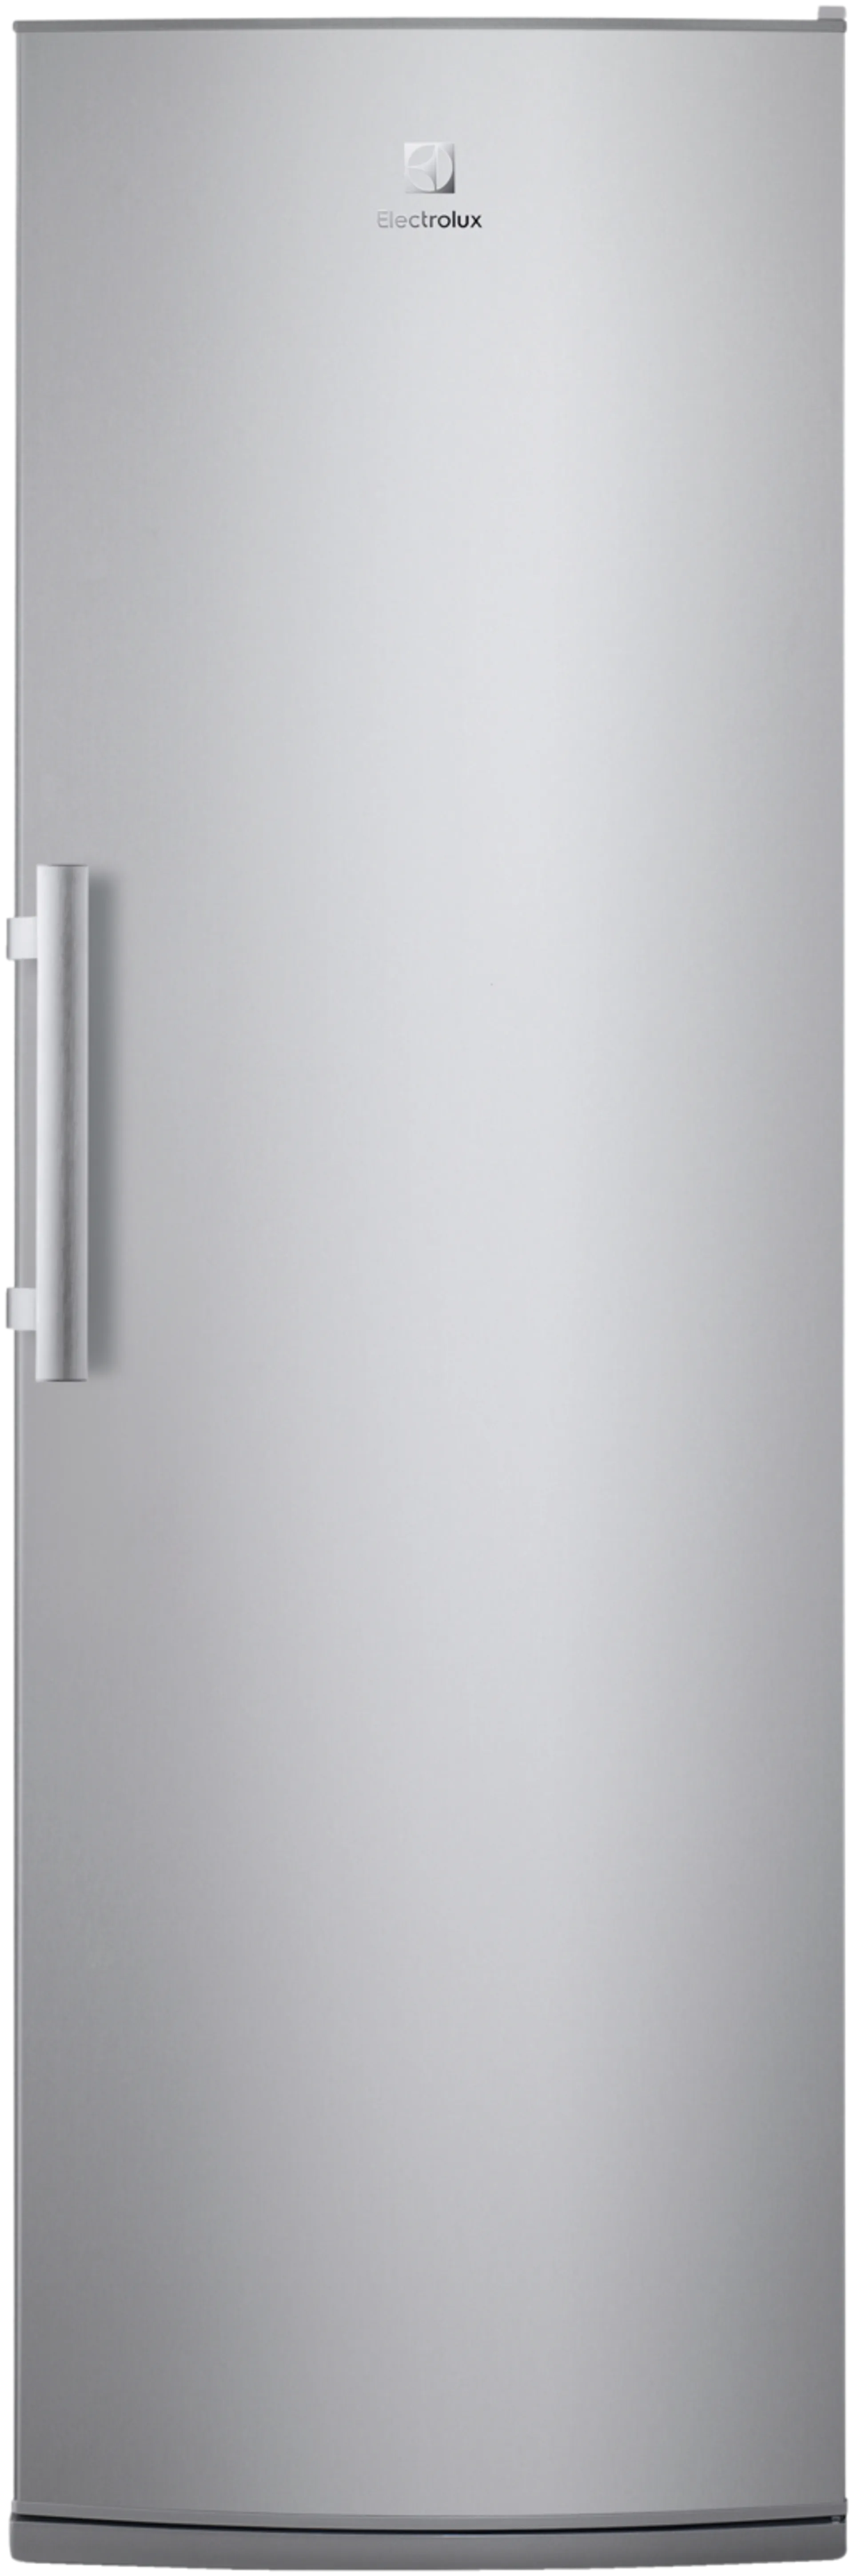 Electrolux jääkaappi LRS2DE39X teräs